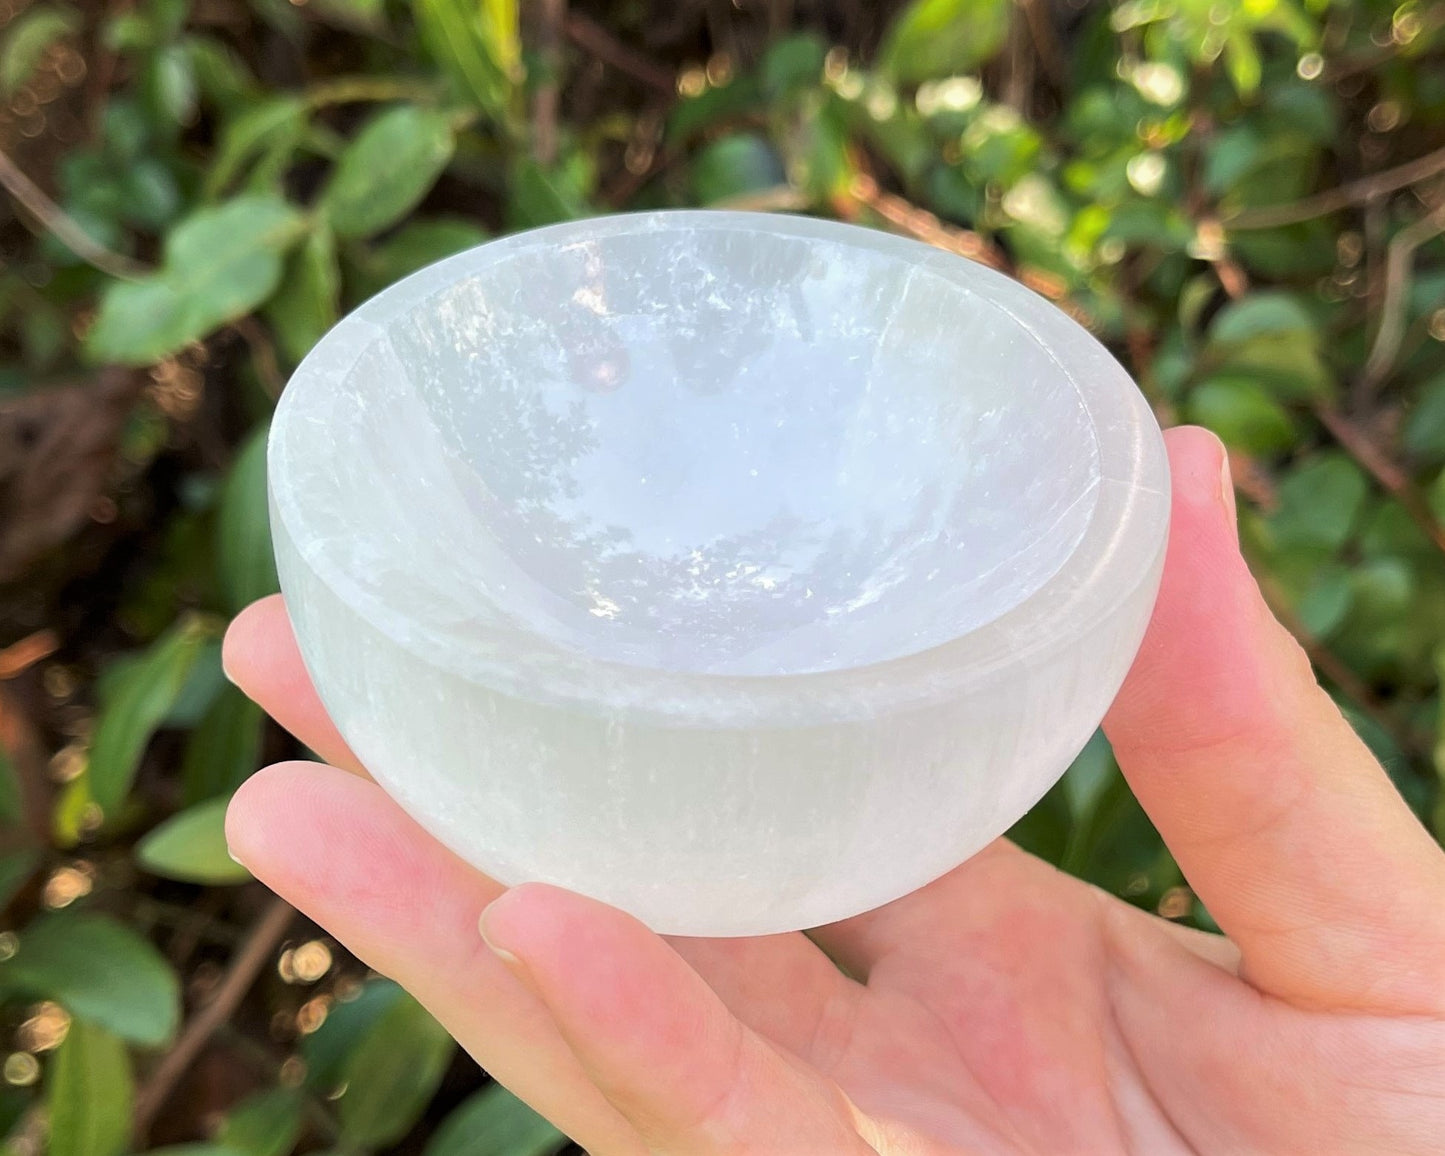 7 Selenite Crystal Bowls